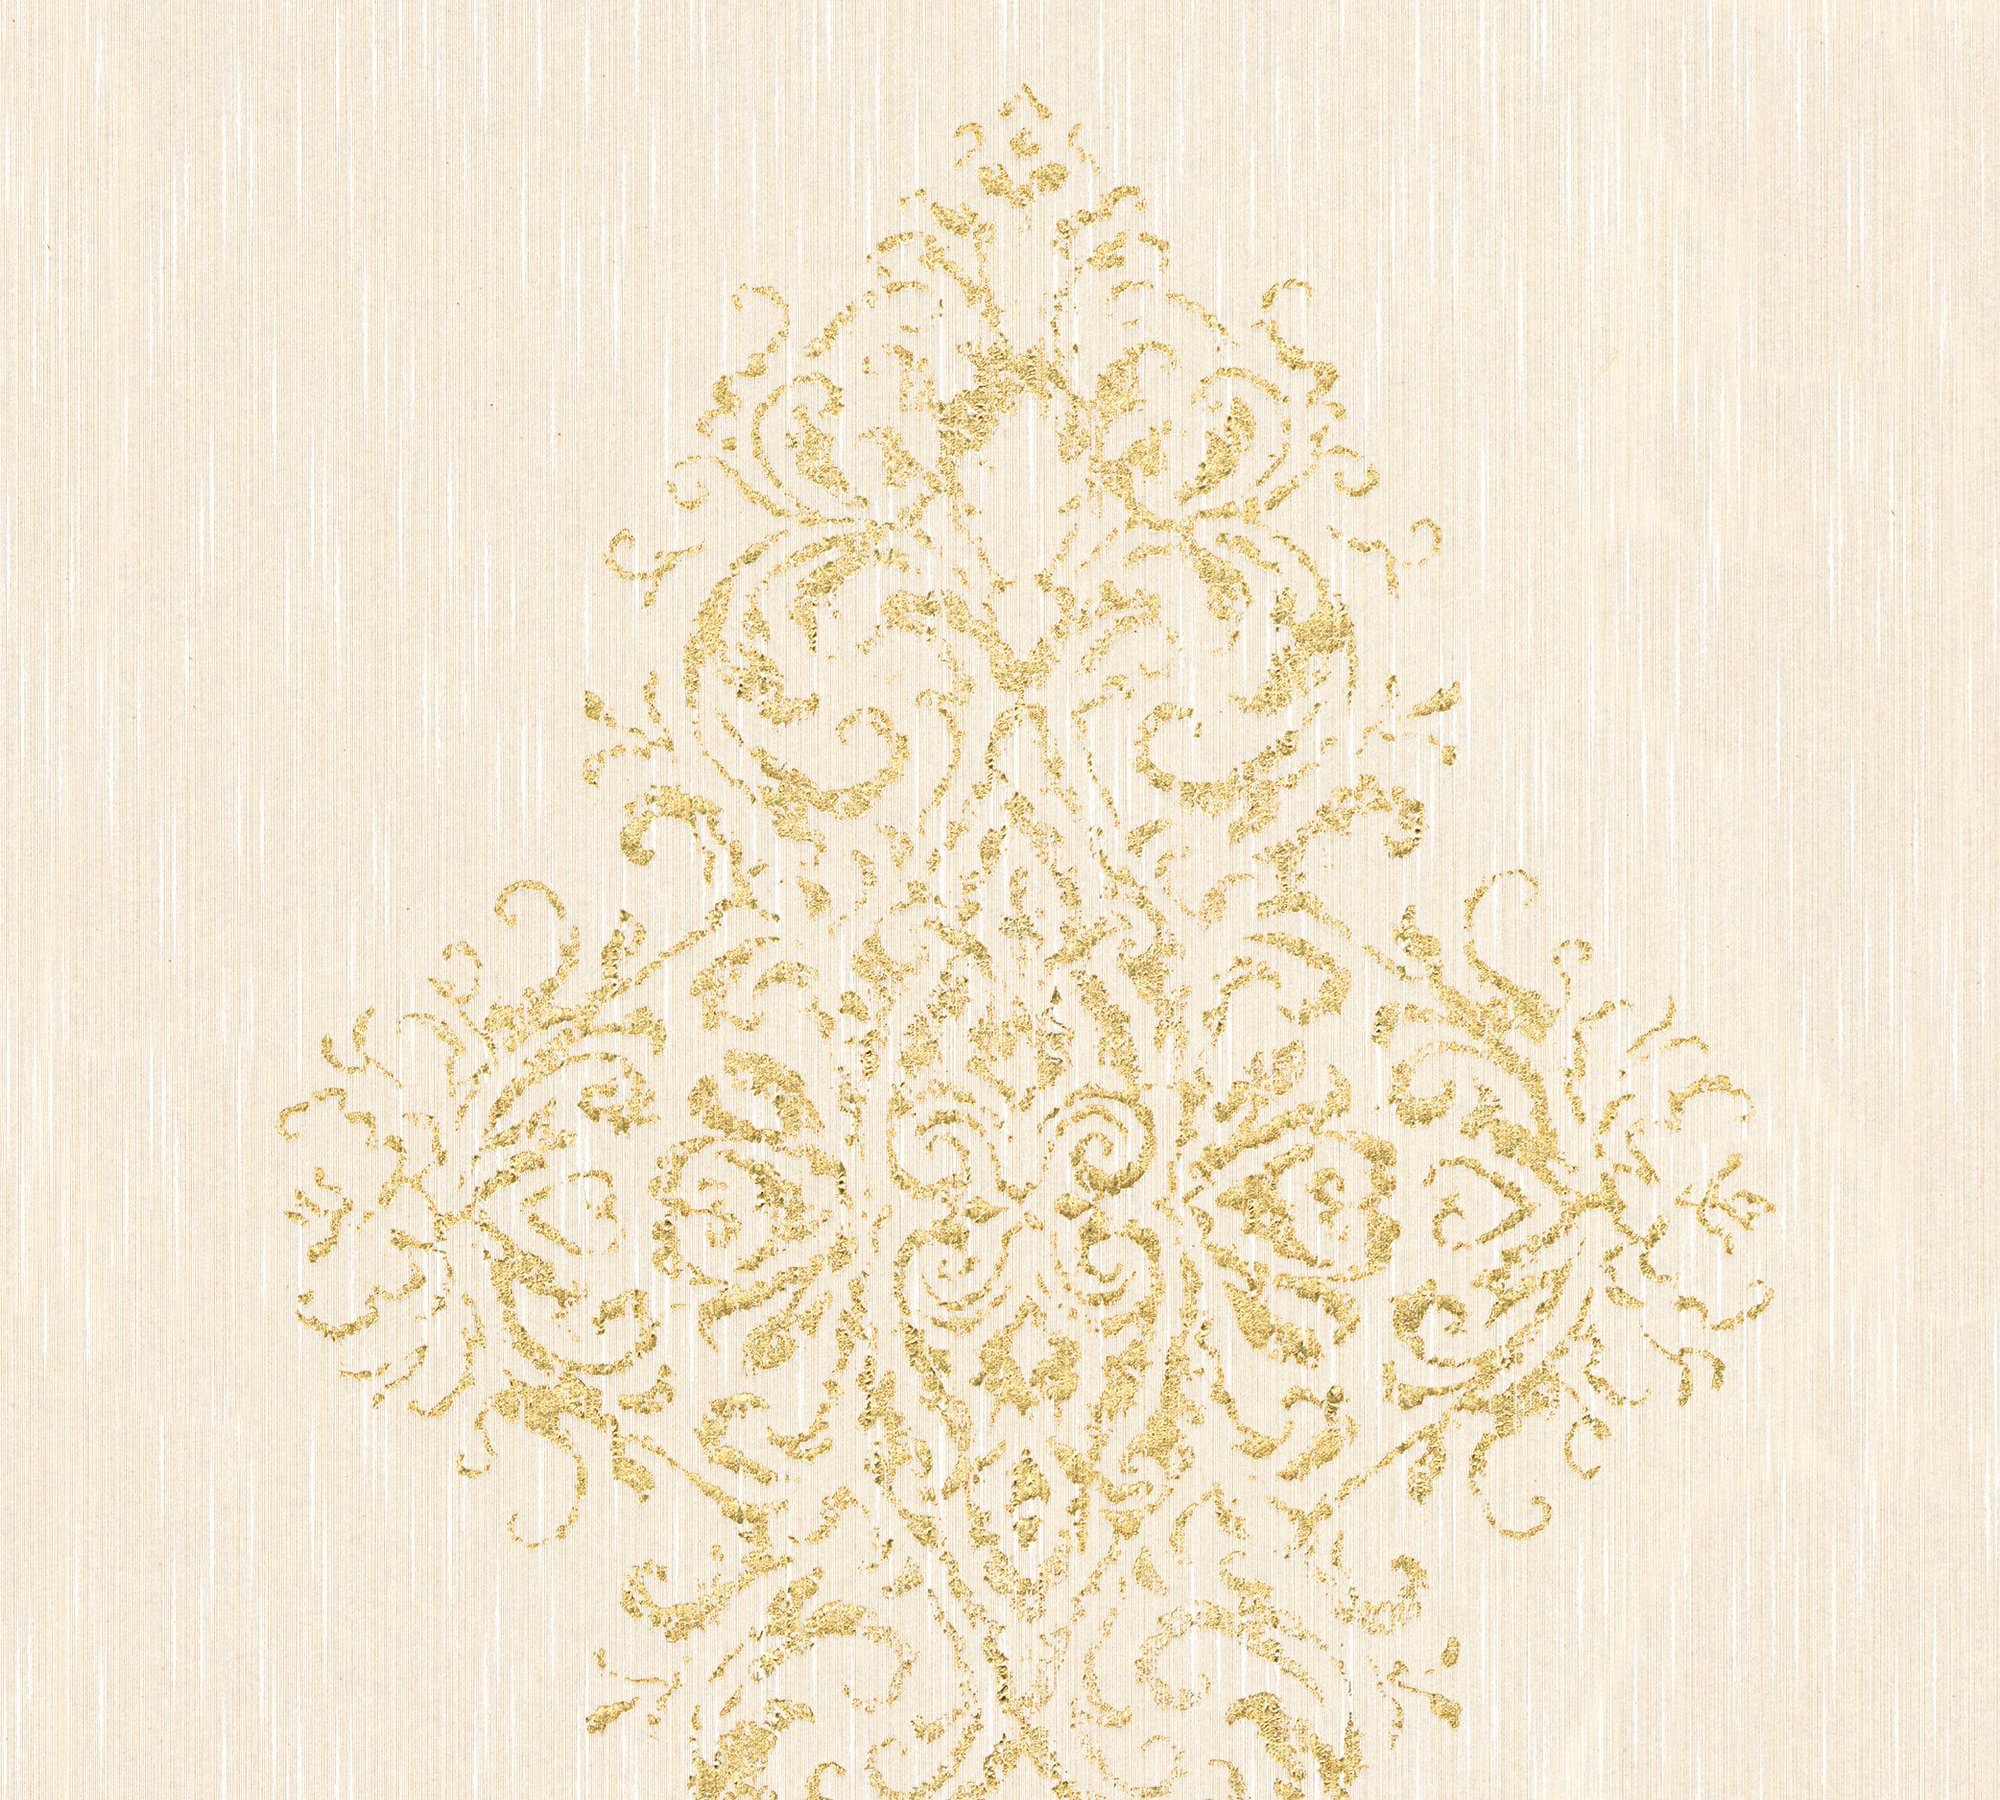 Tapete samtig, Textiltapete Metallic wallpaper, Paper Effekt creme/gold Barock, Barock Création A.S. Luxury Architects Textil